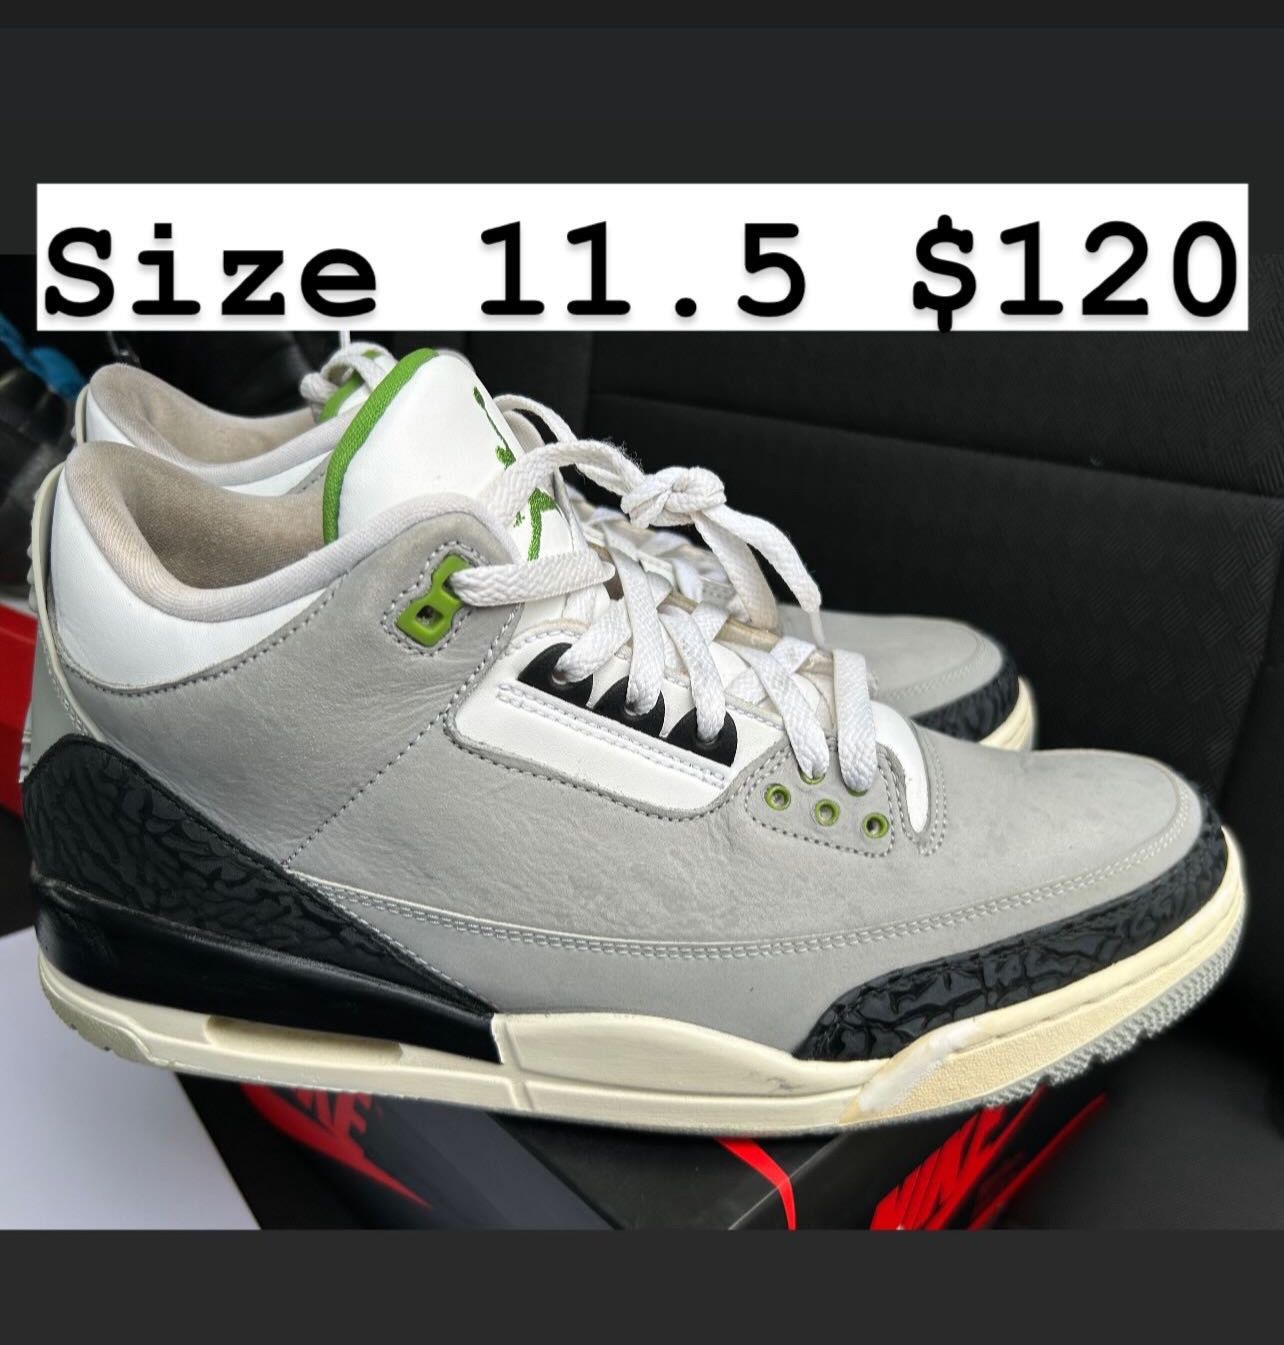 Jordan Retro 3s Size 11.5